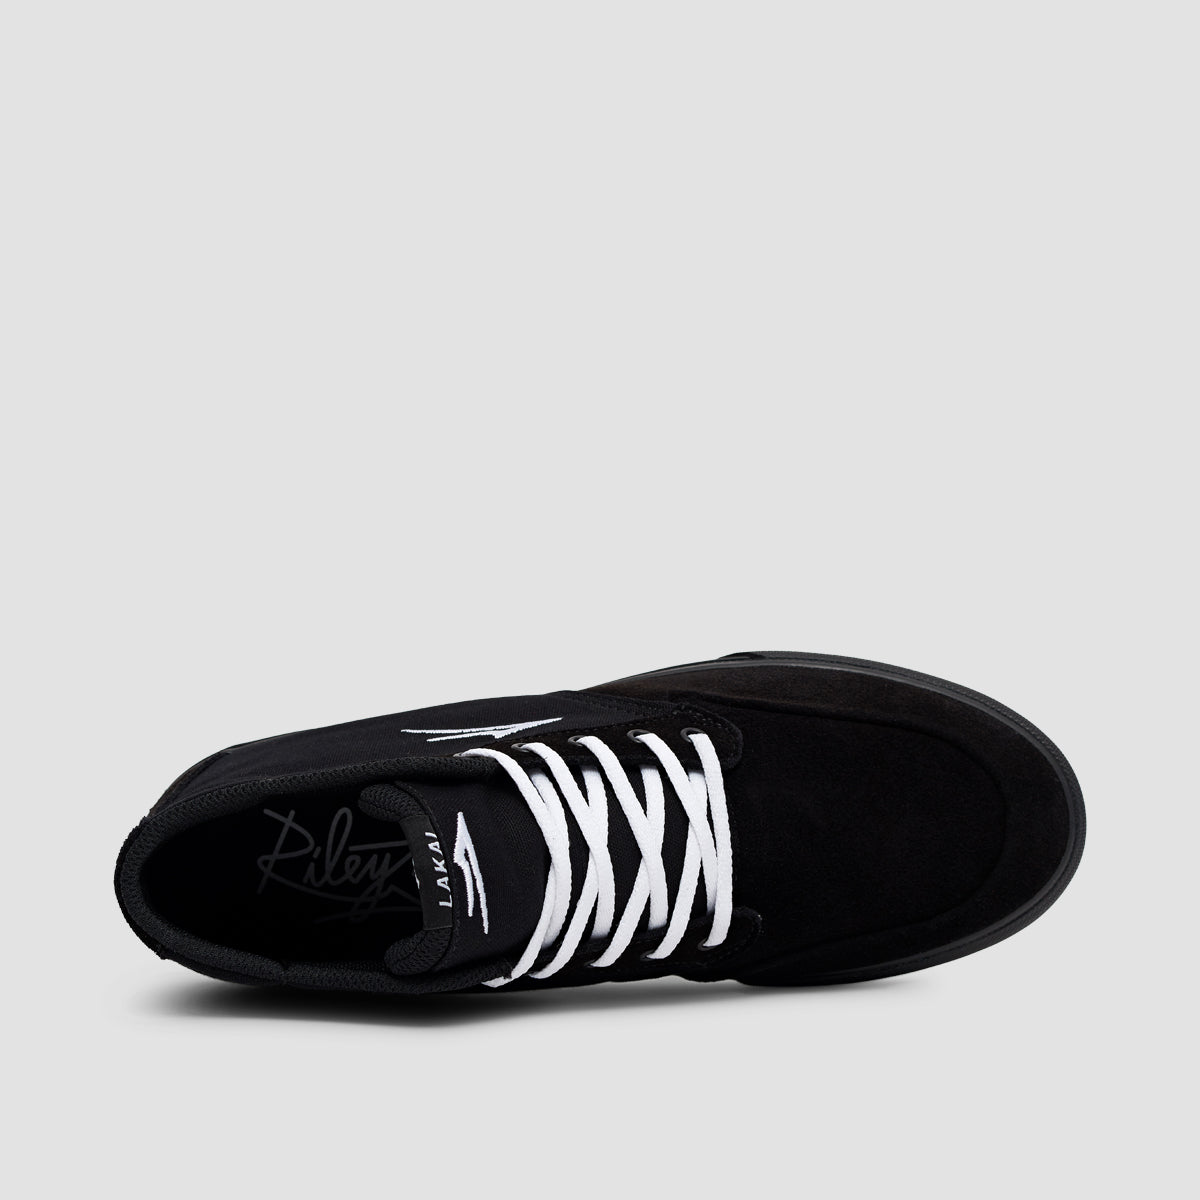 Lakai Riley 3 High Shoes - Black/Black Suede